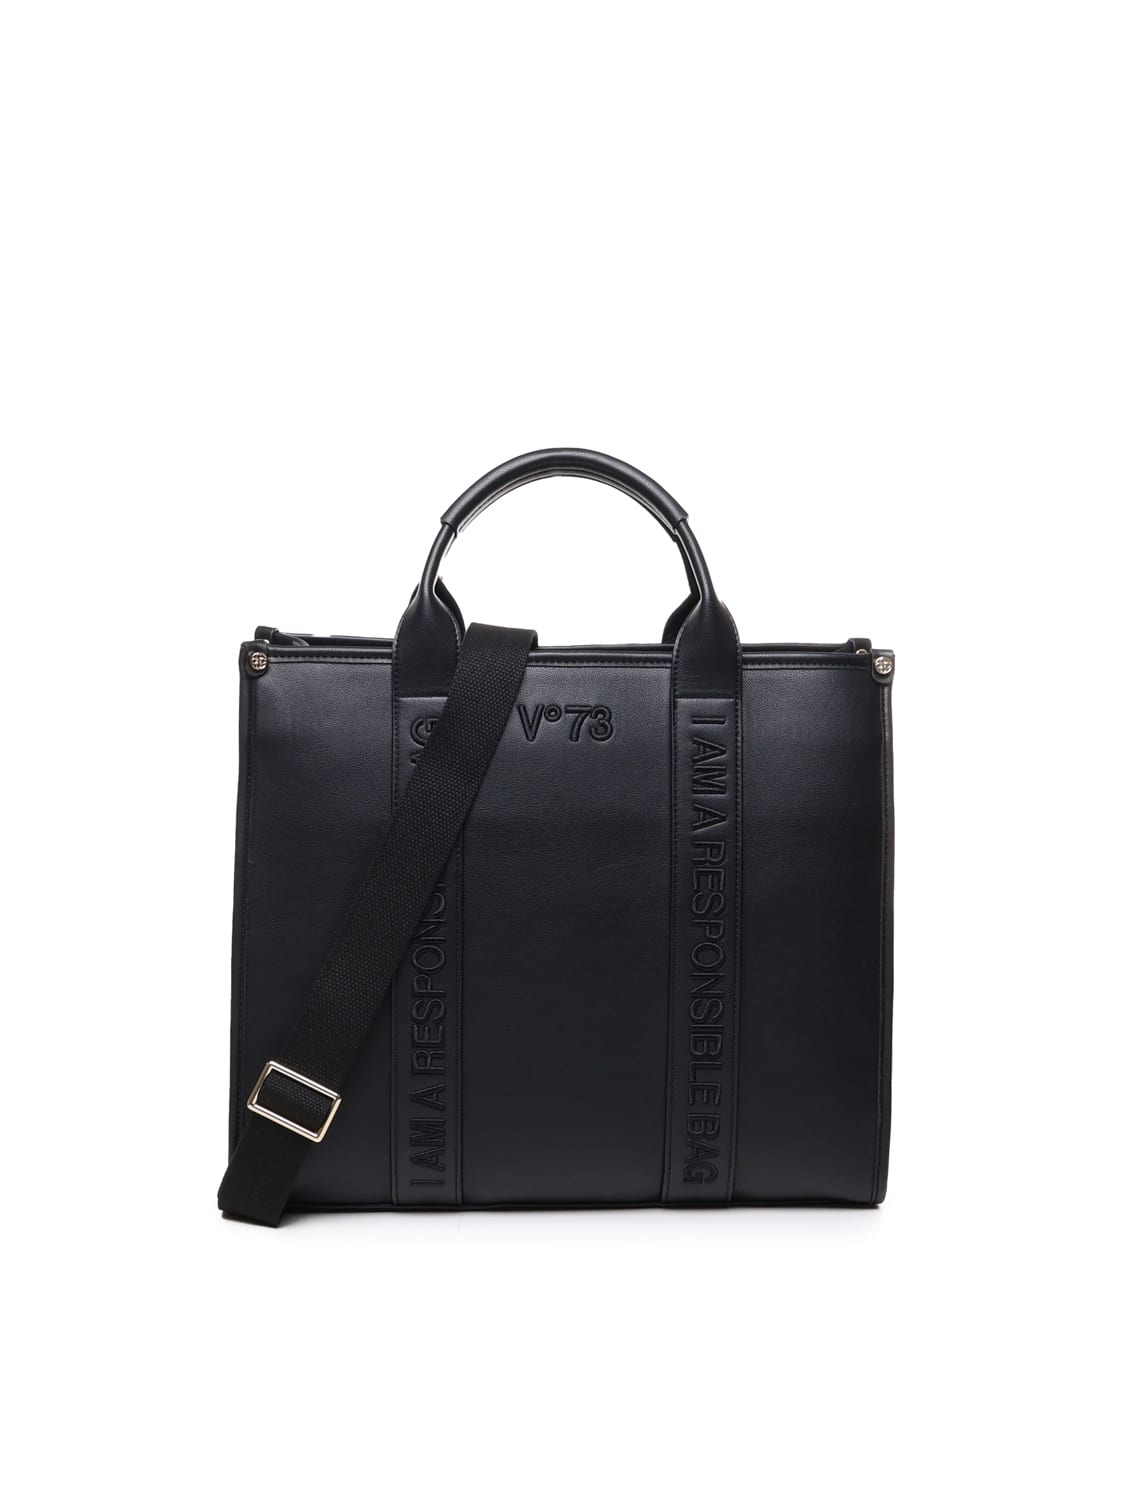 Shop V73 Echo 73 Shopping Bag In Black